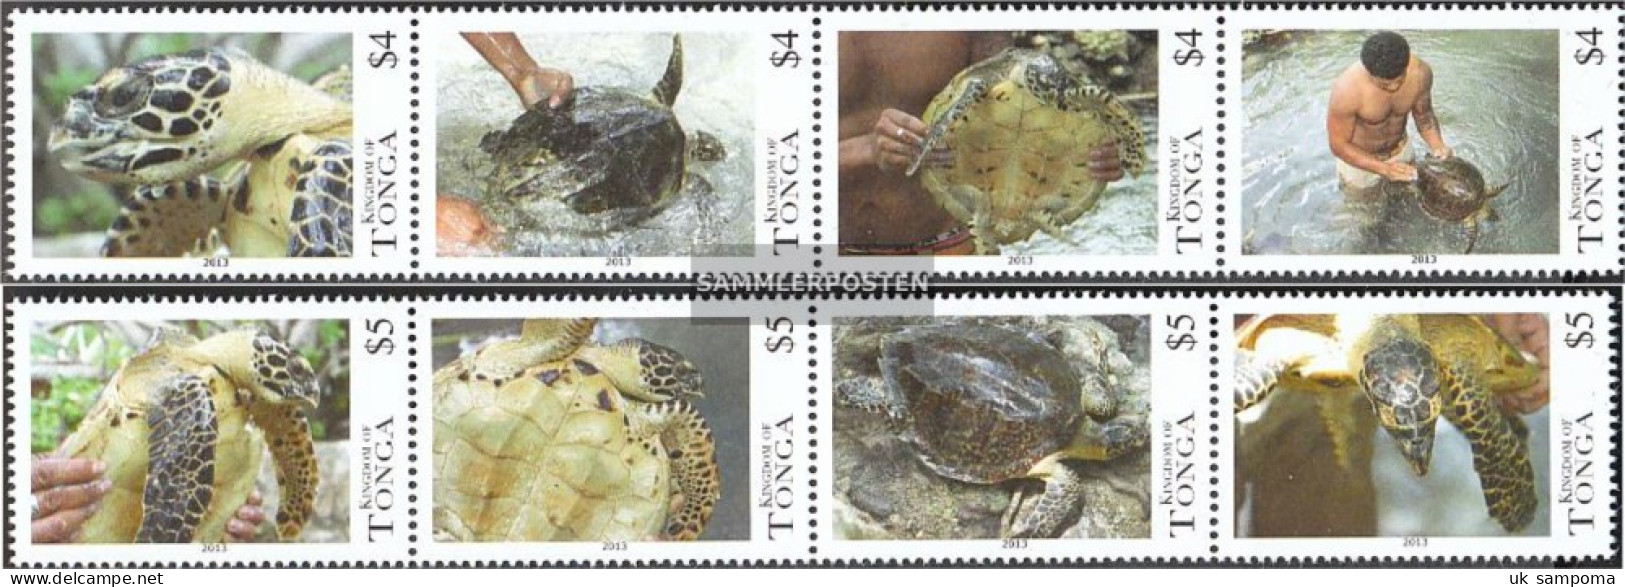 Tonga 1860-1867 Quad Strip (complete Issue) Unmounted Mint / Never Hinged 2013 Marine Turtles - Tonga (1970-...)